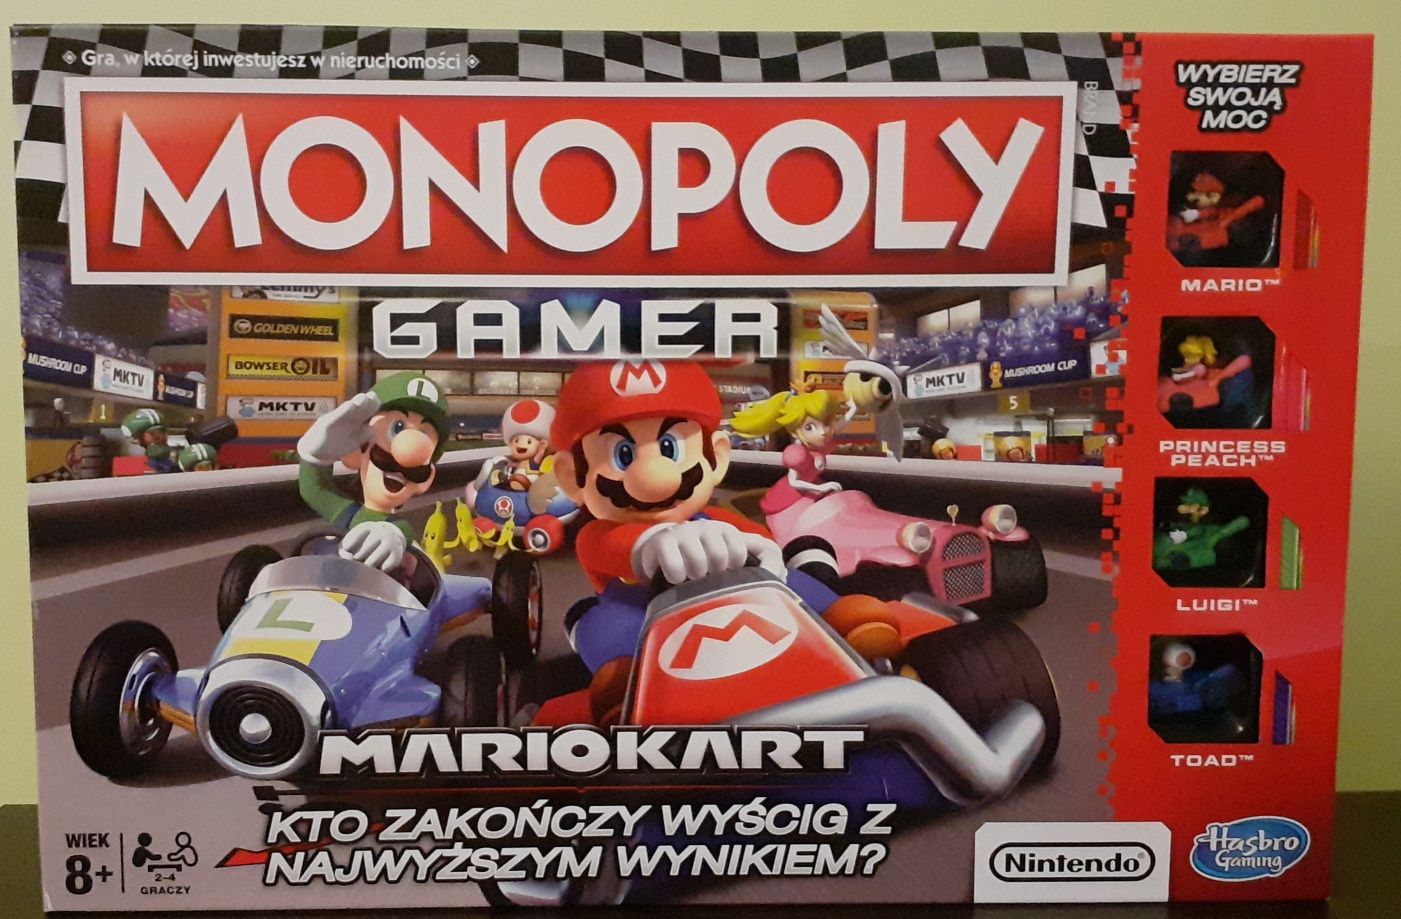 Monopoly Gamer Mariokart